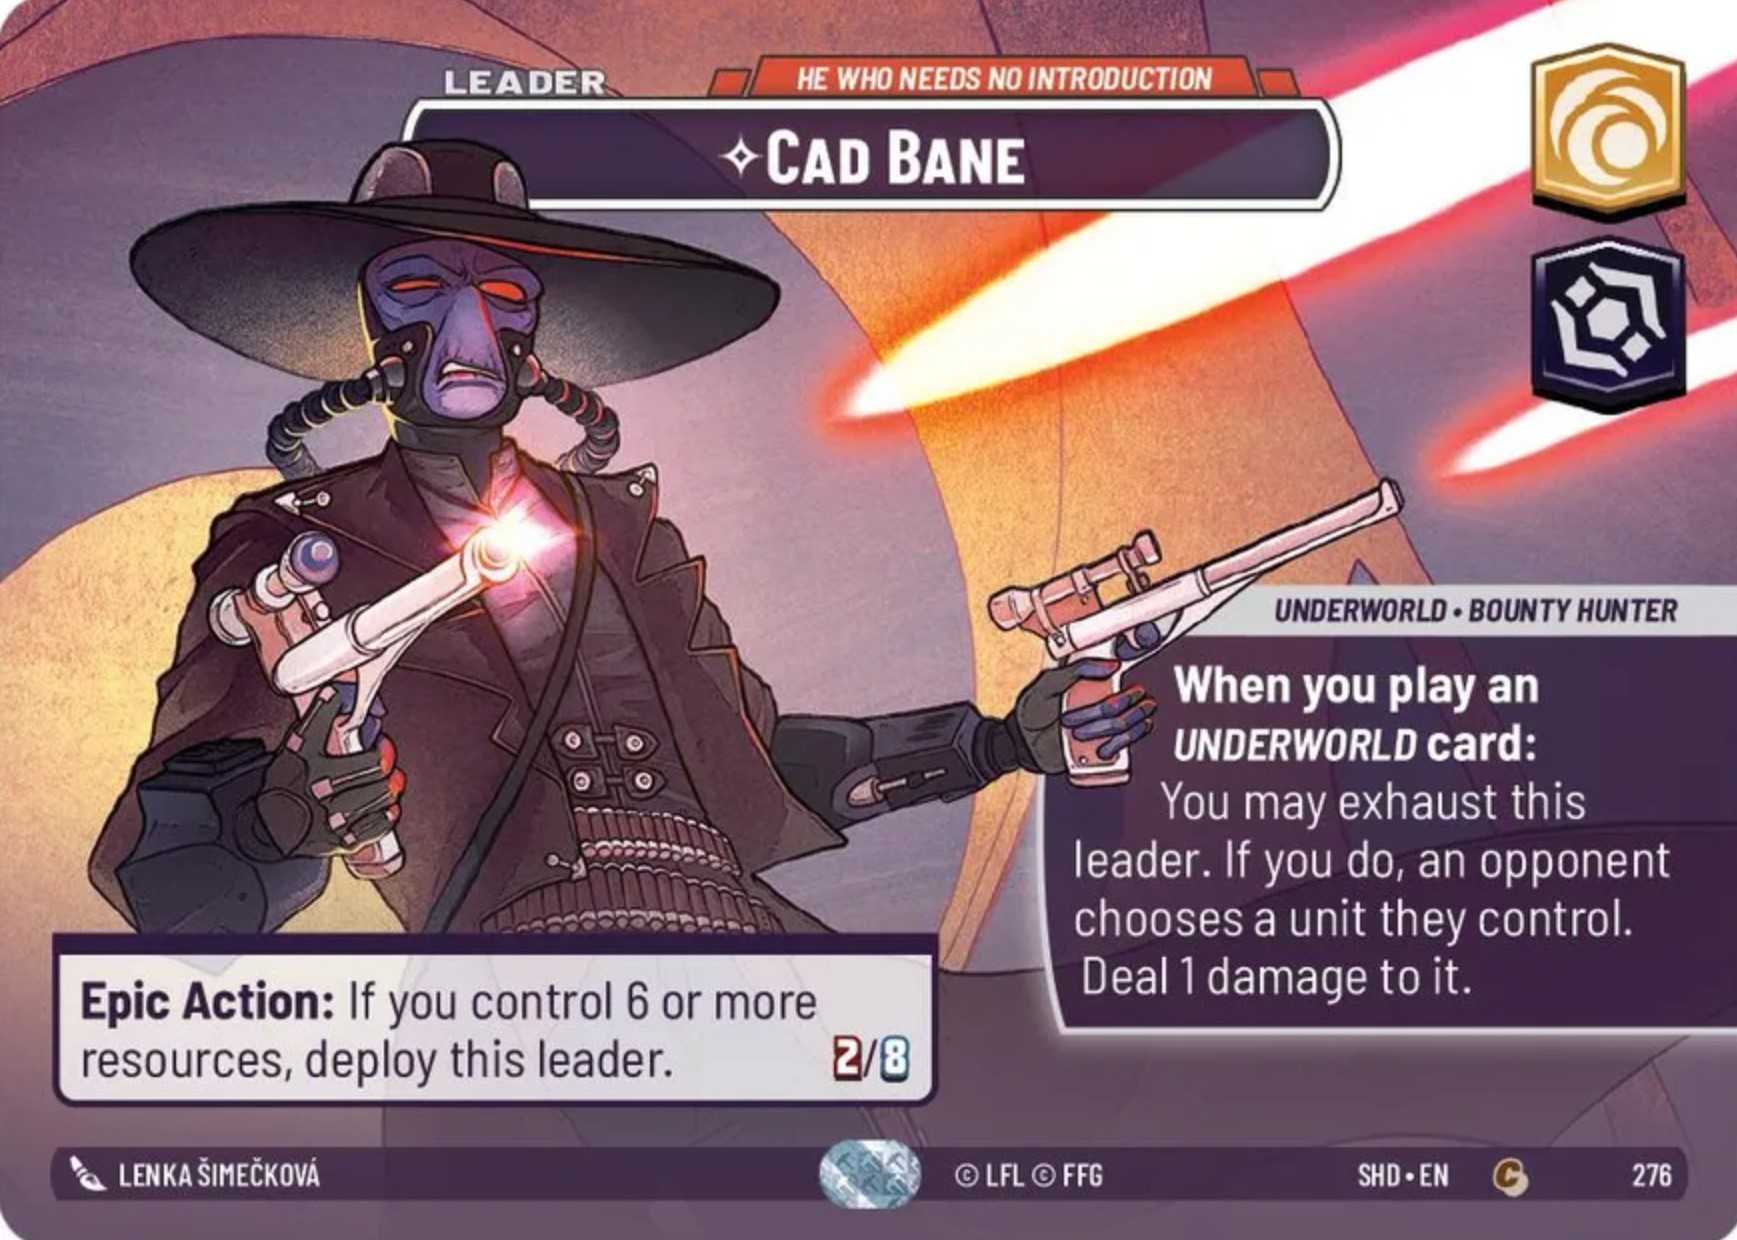 Cad Bane Showcase card in Star Wars Unlimited